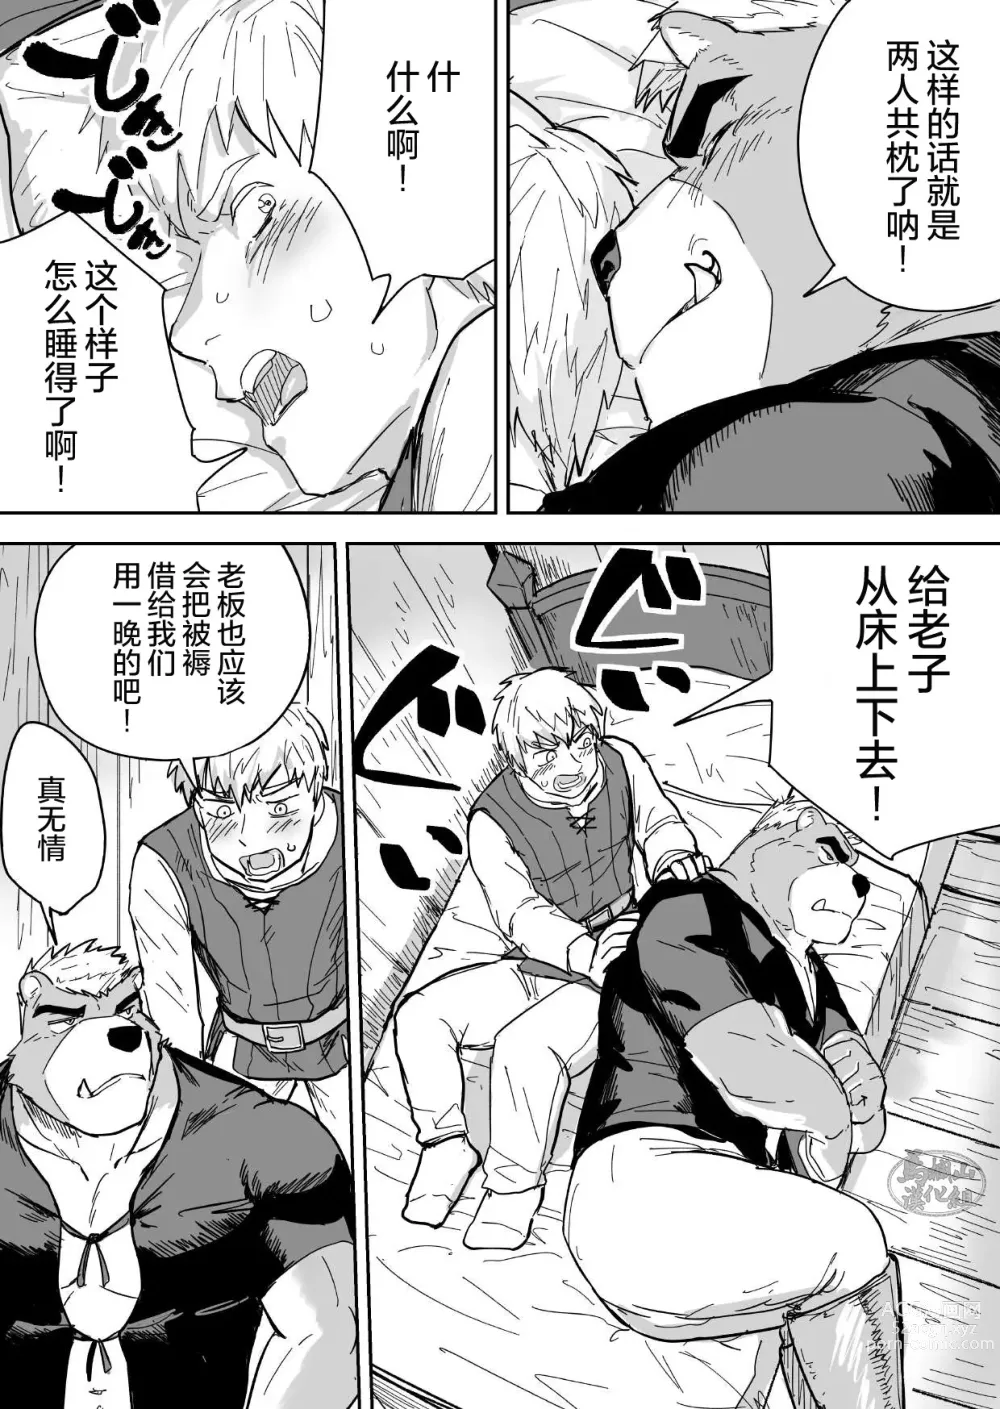 Page 7 of doujinshi Aibou Gachimuchi Kemonohito Senshi to Aibou Ijou ni Naru Hanashi｜ 当伙伴是强壮兽人战士之后和他超越友谊的故事